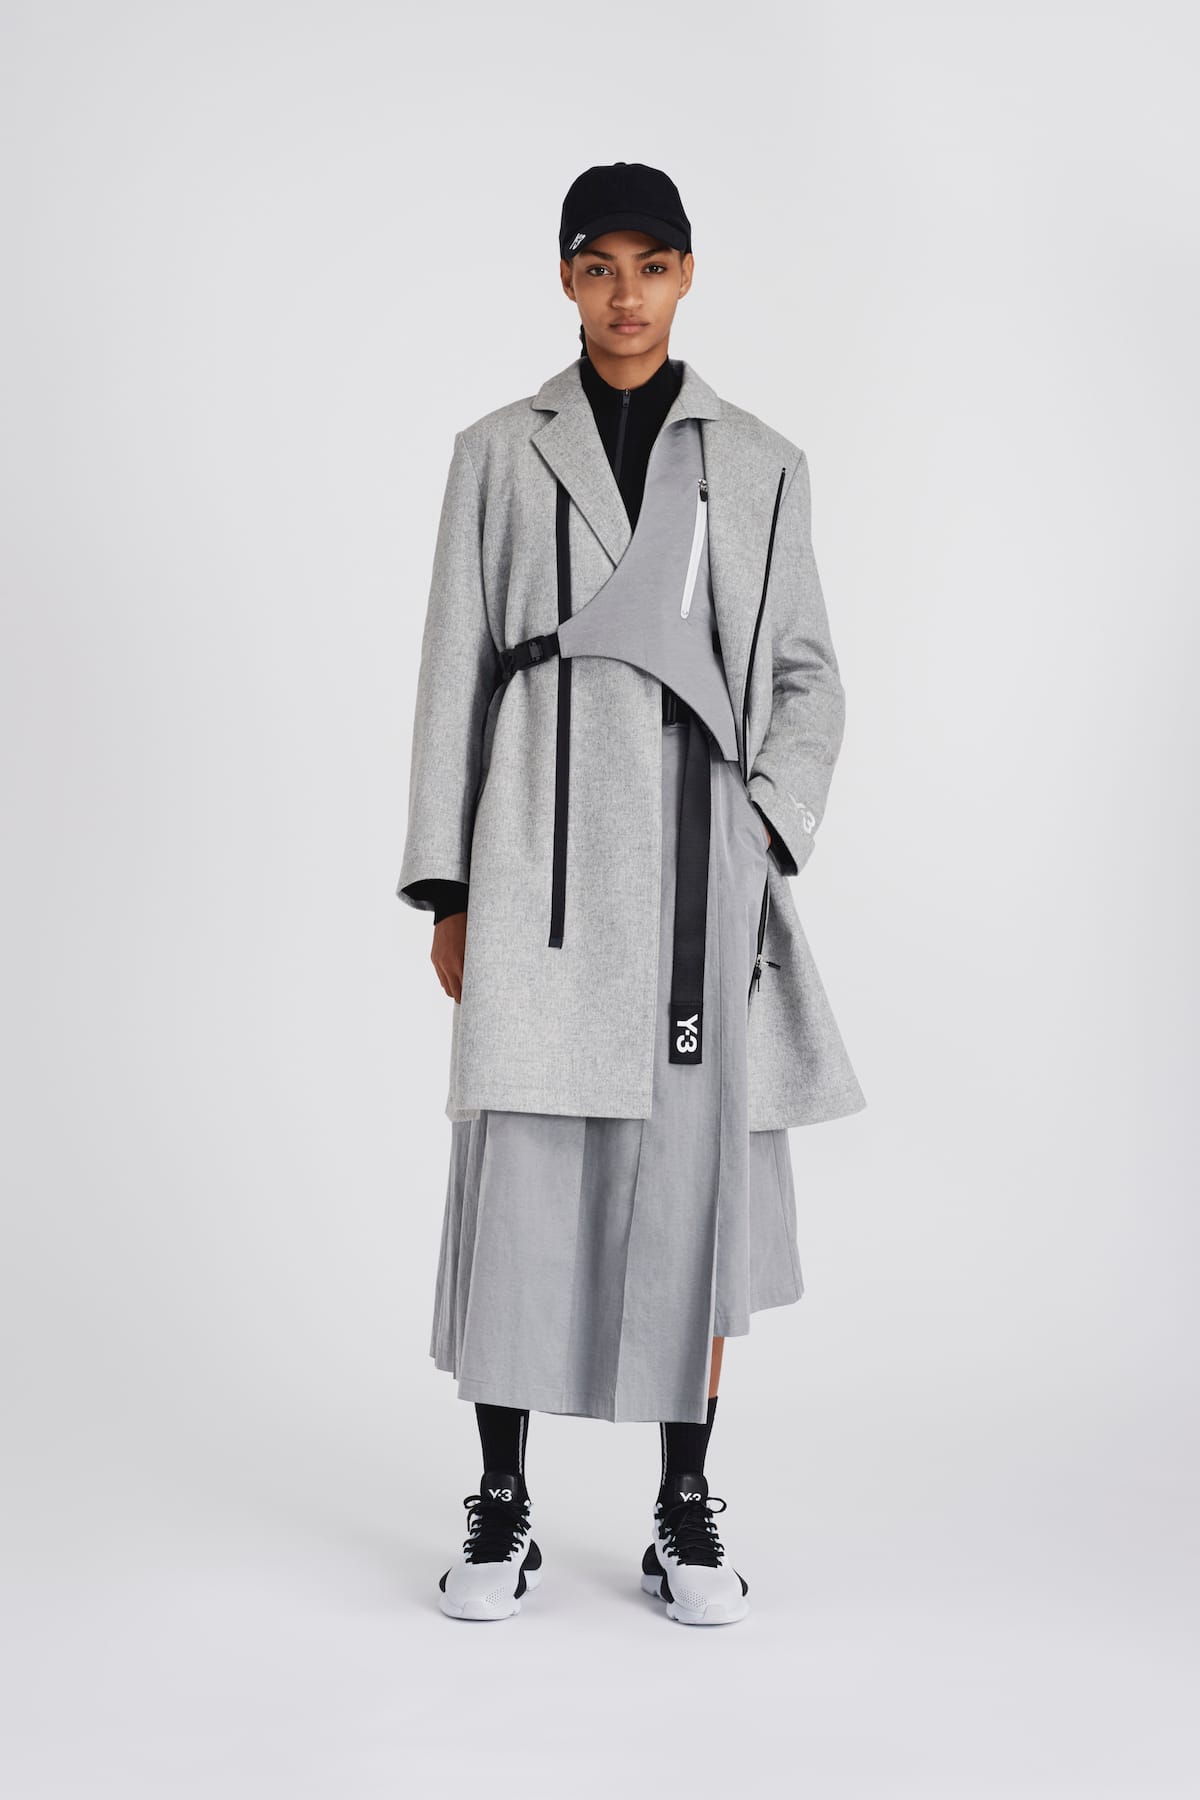 adidas grey coat